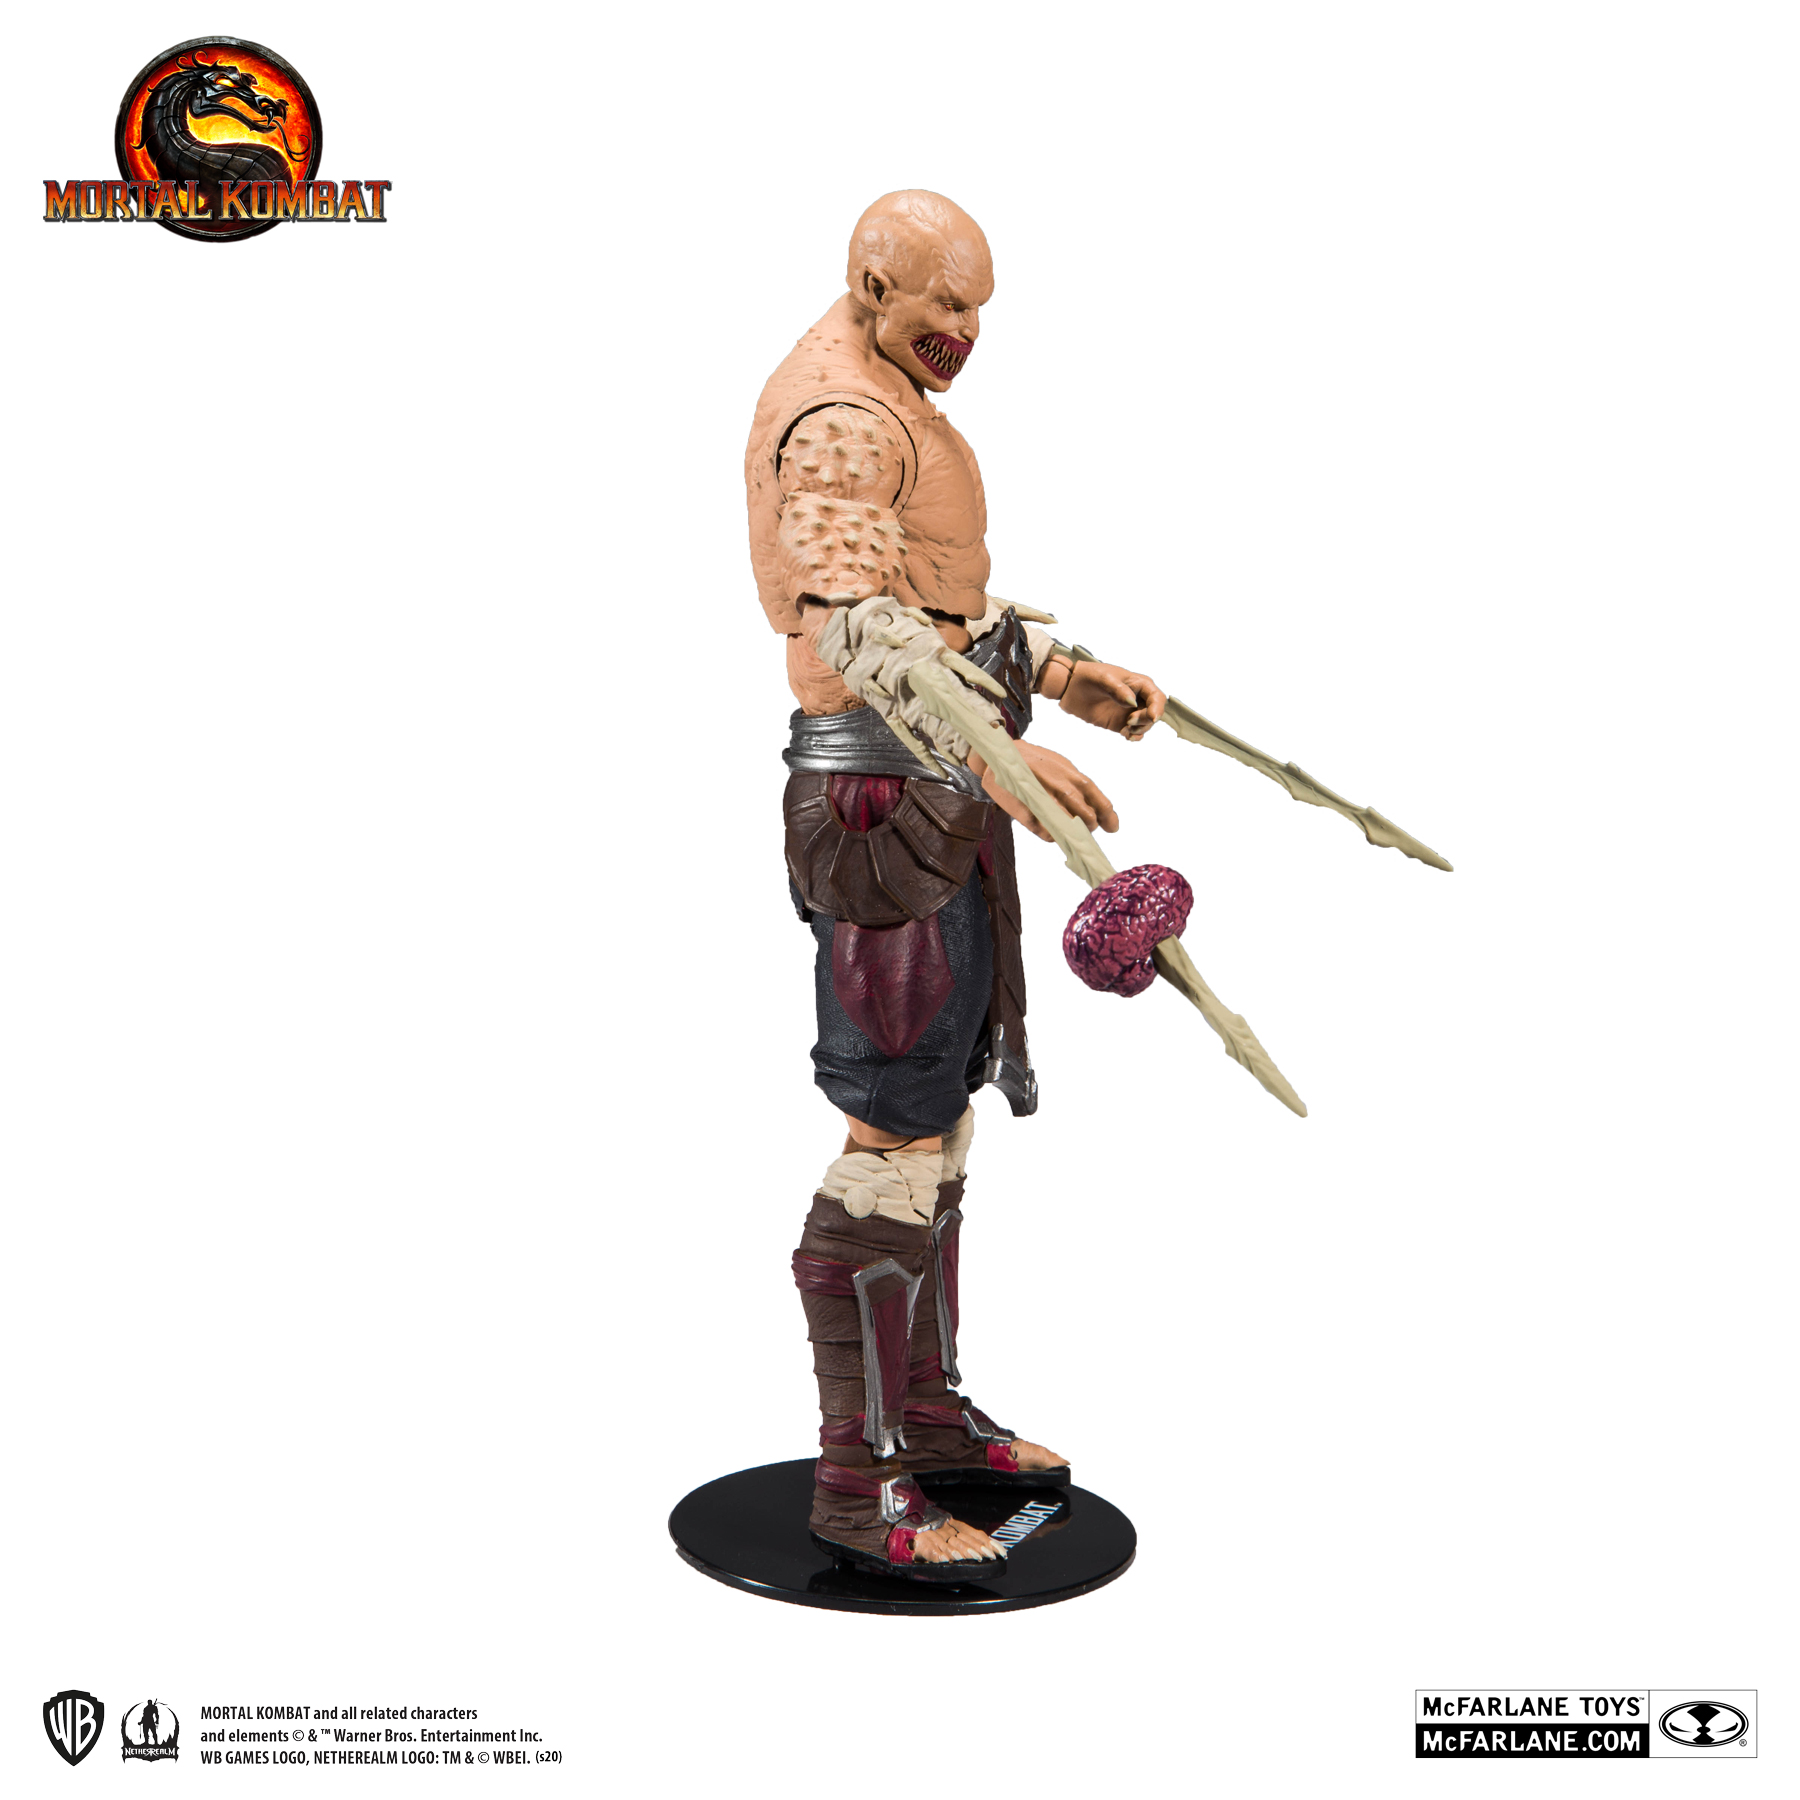 Baraka (Mortal Kombat) Custom Action Figure